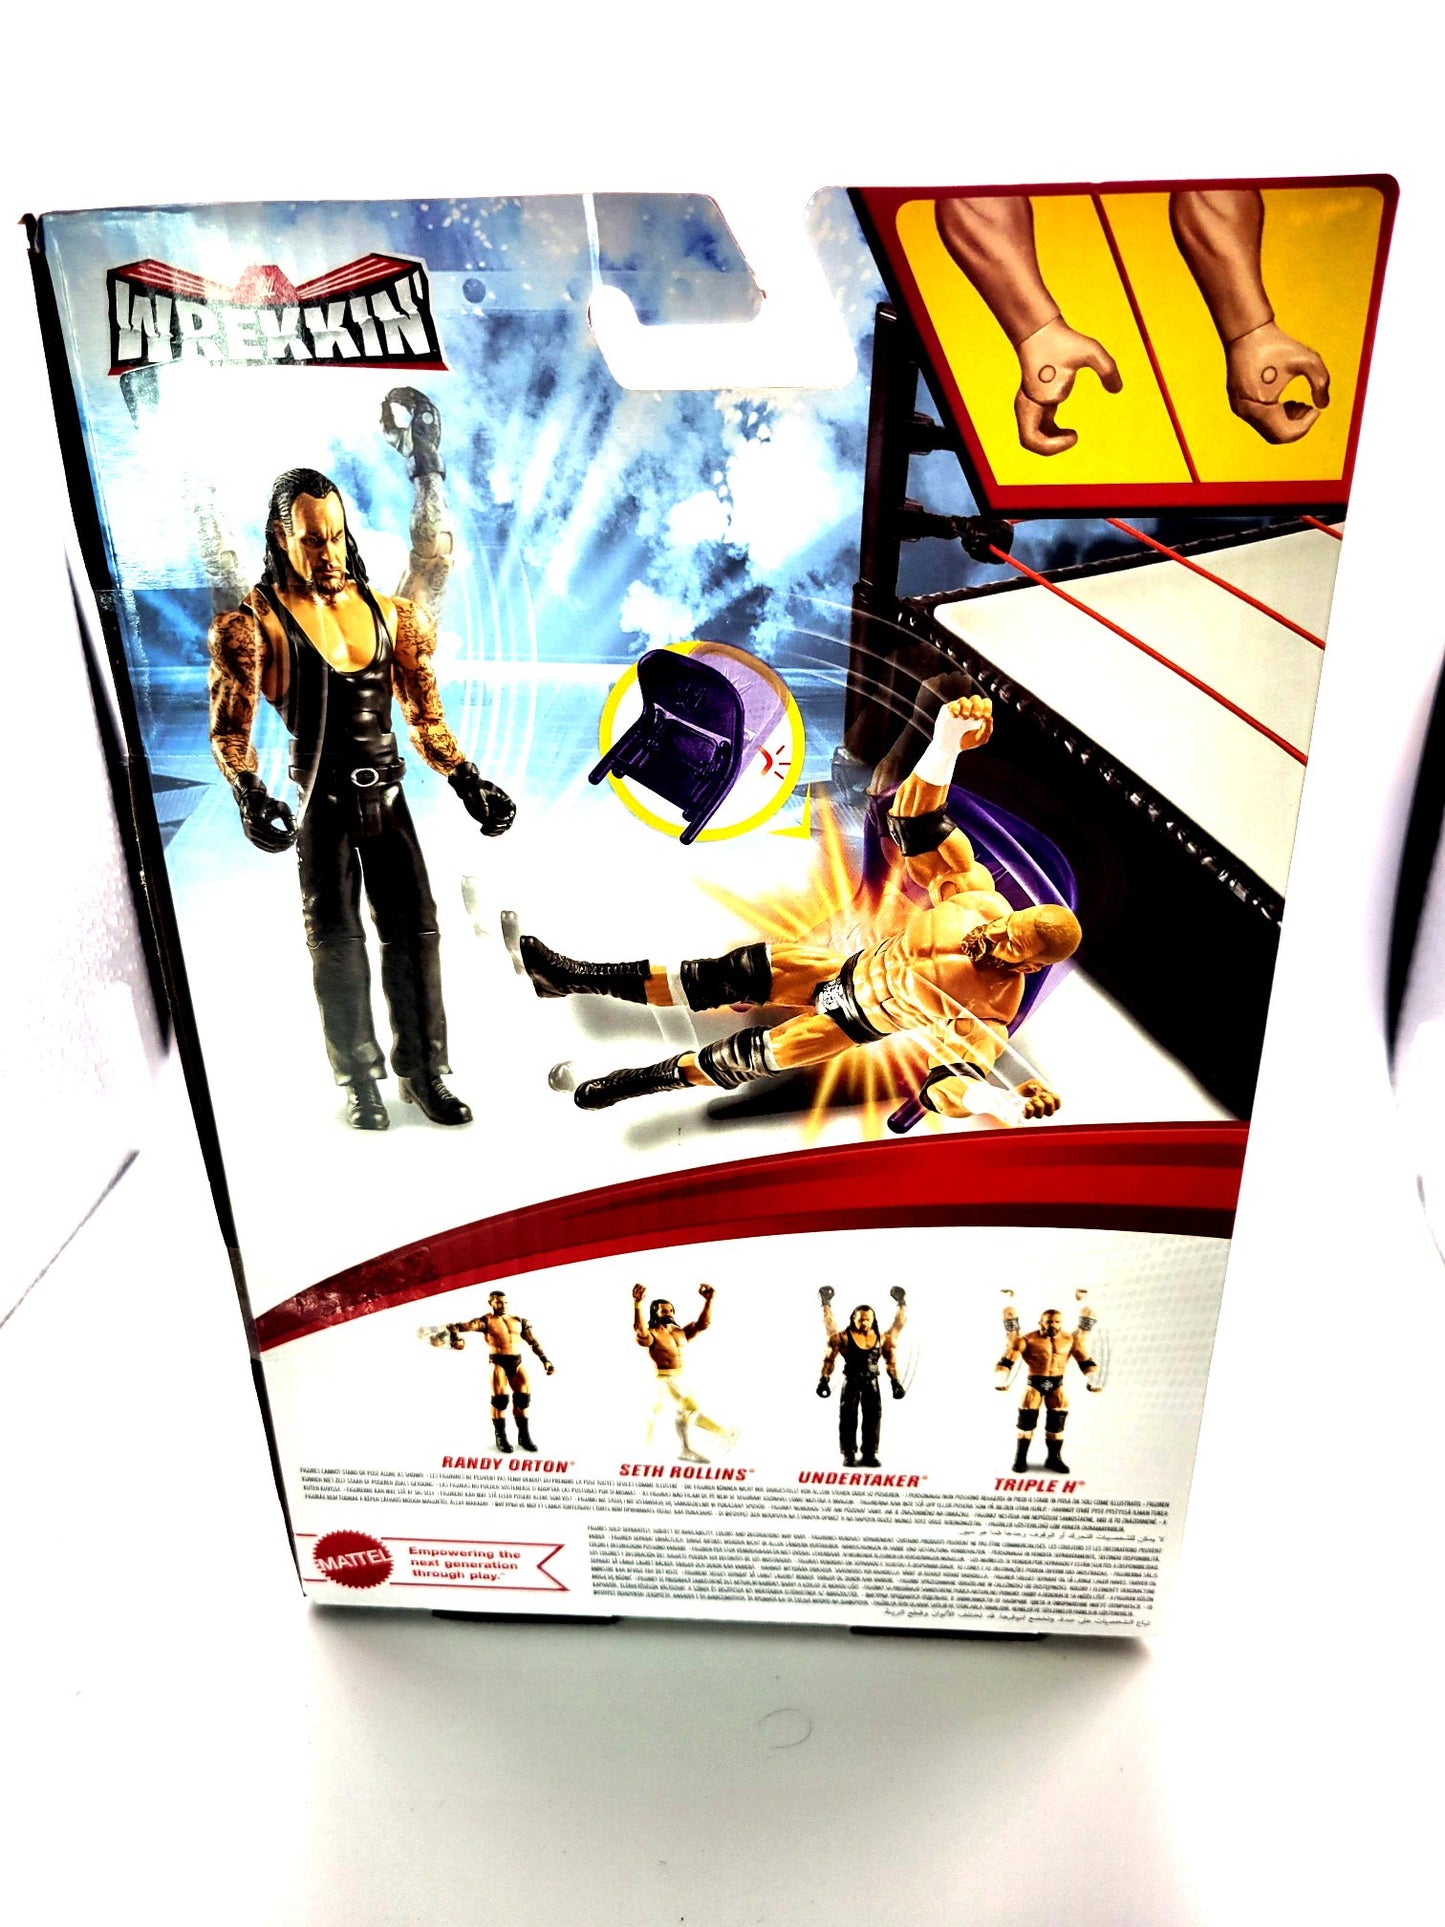 Mattel WWE Wrekkin' Series (2021) The Undertaker Action Figure